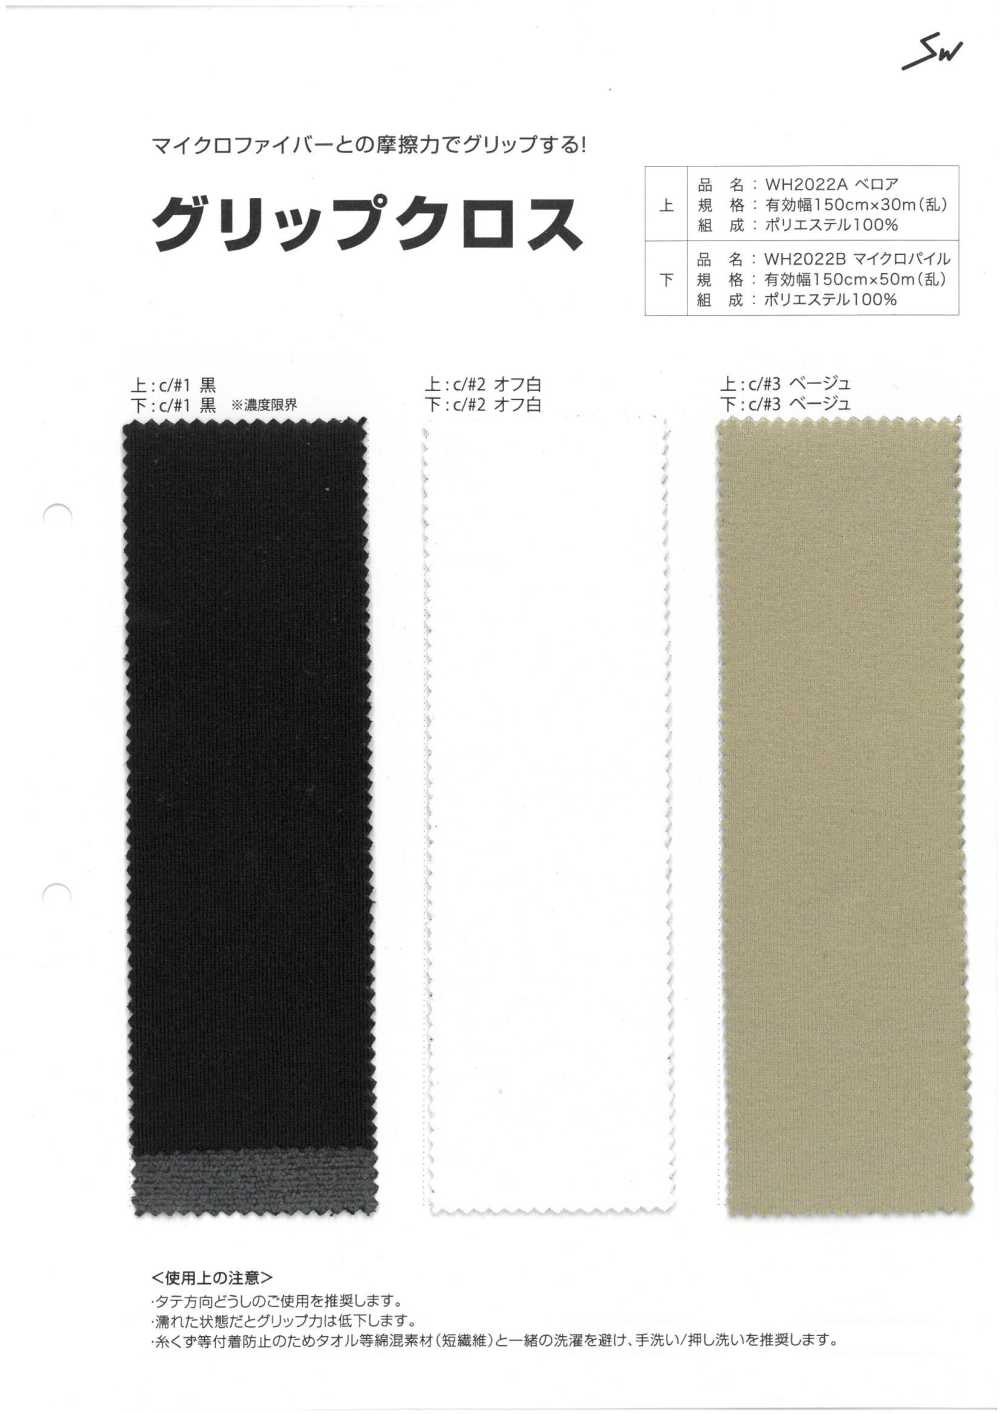 WH2022B Grip Cross B Pile[Textile / Fabric] Sanwa Fibers